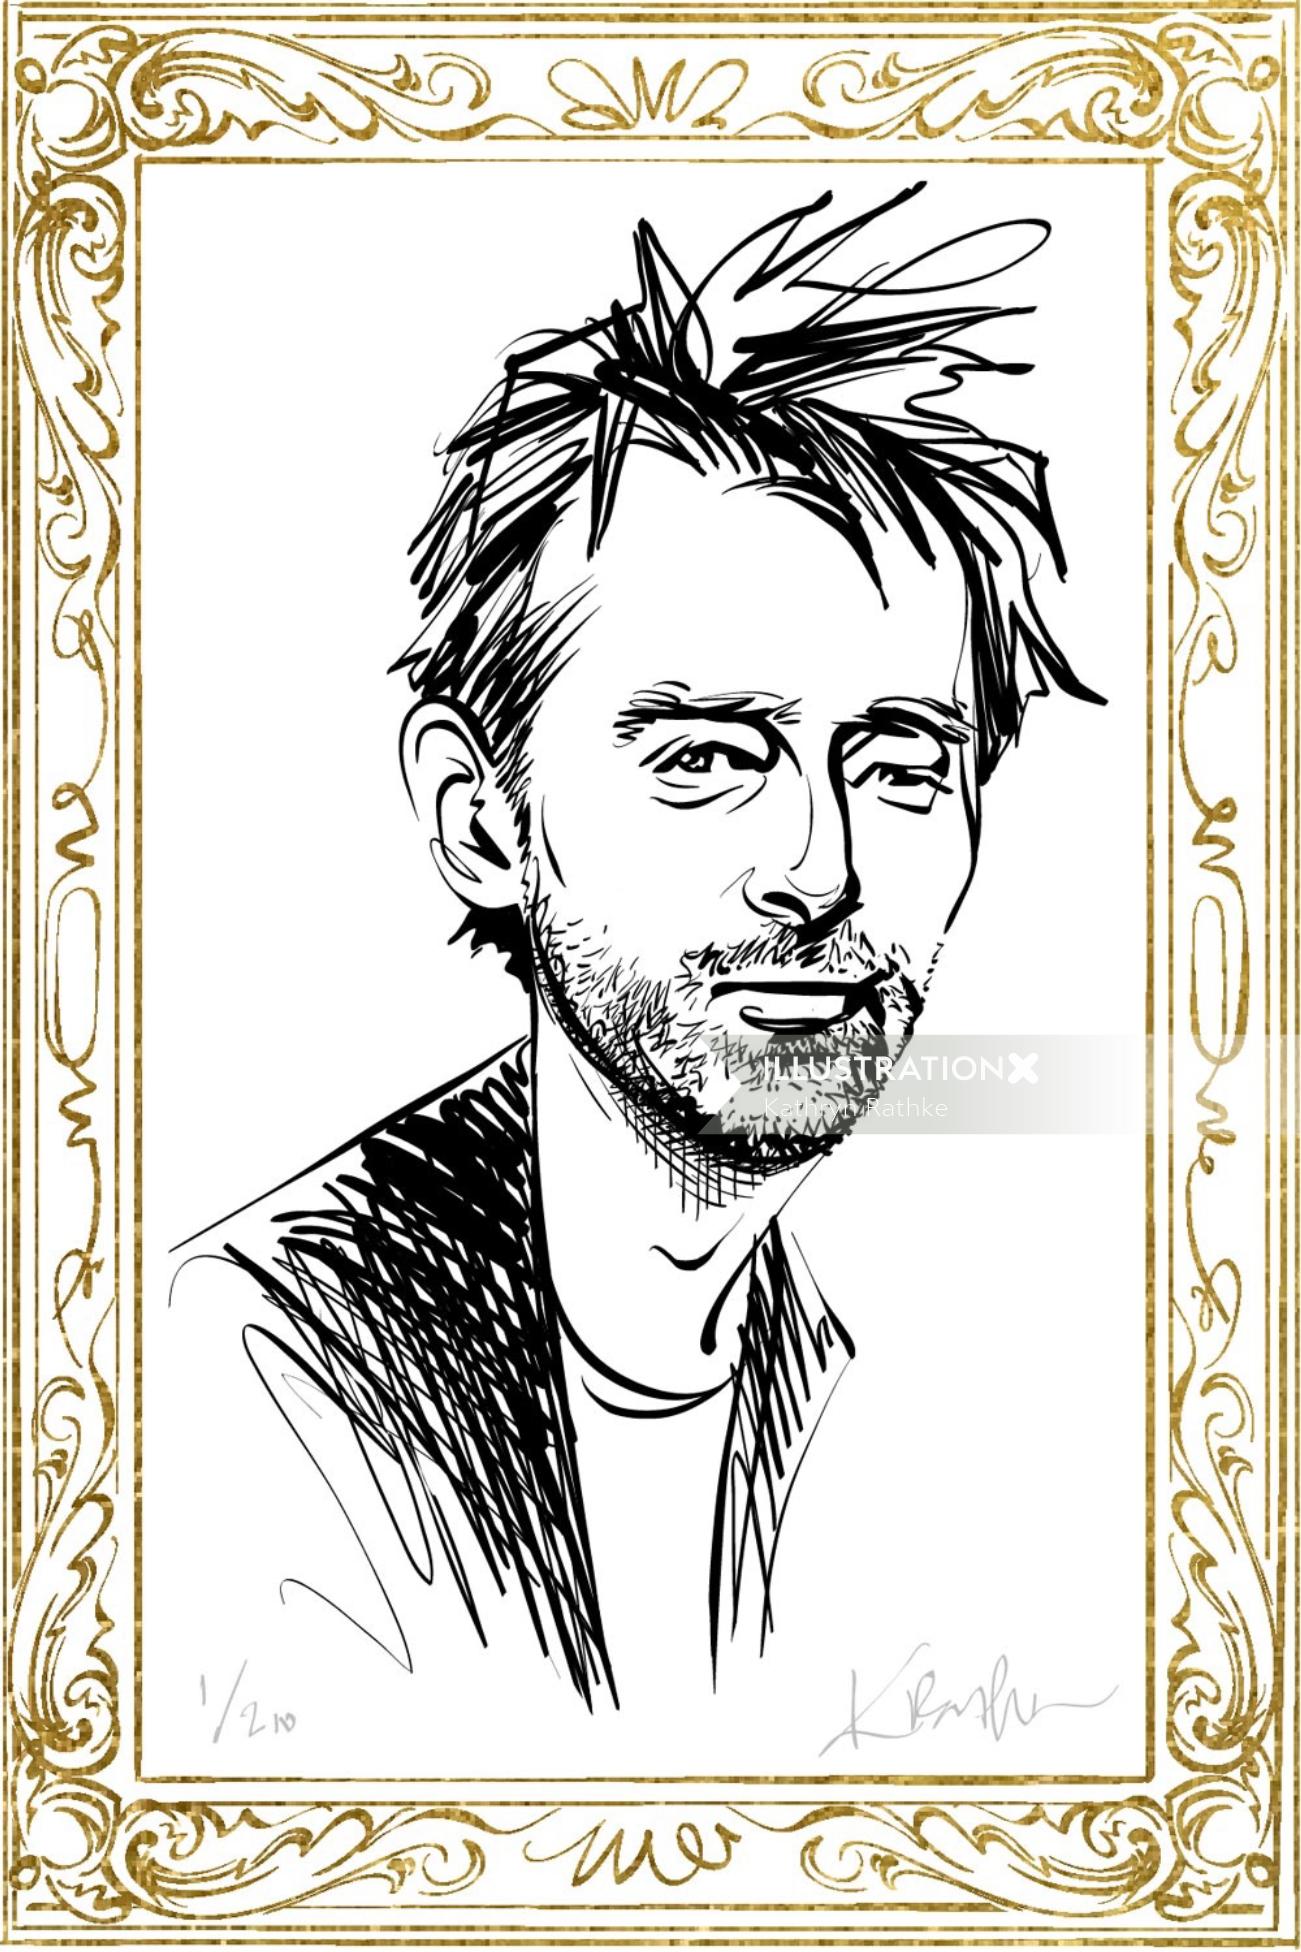 Retrato de Thom Yorke